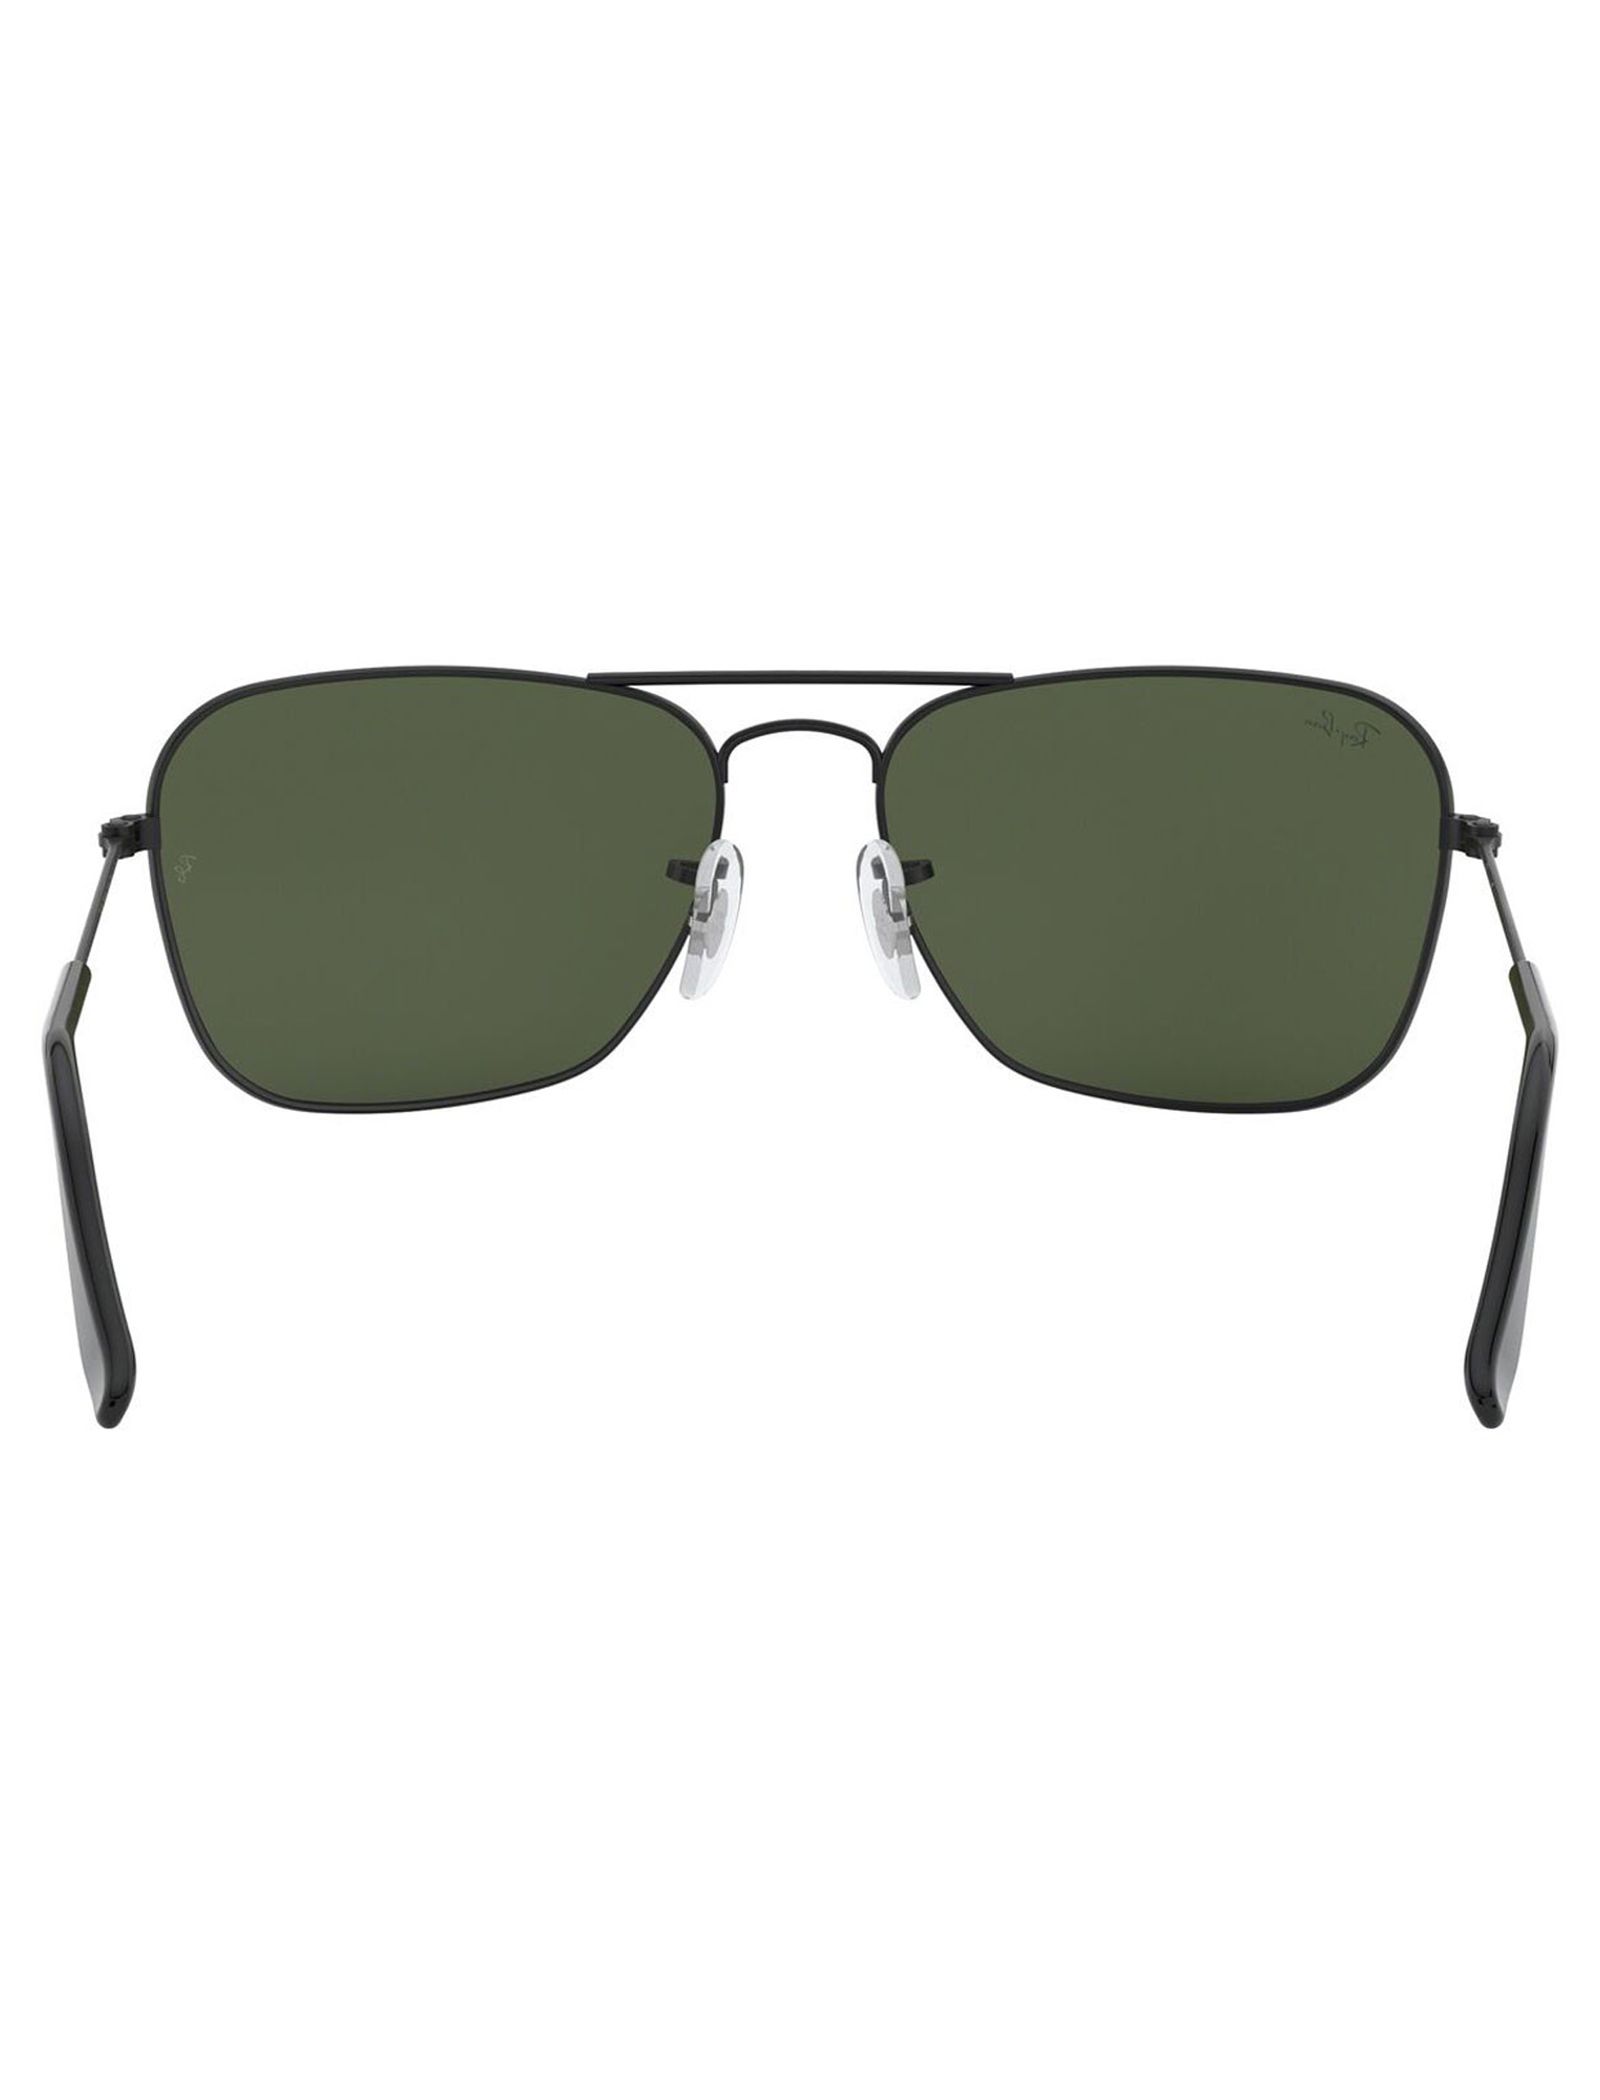 عینک آفتابی ری بن مدل 3136-002-58 - مشکی - 5